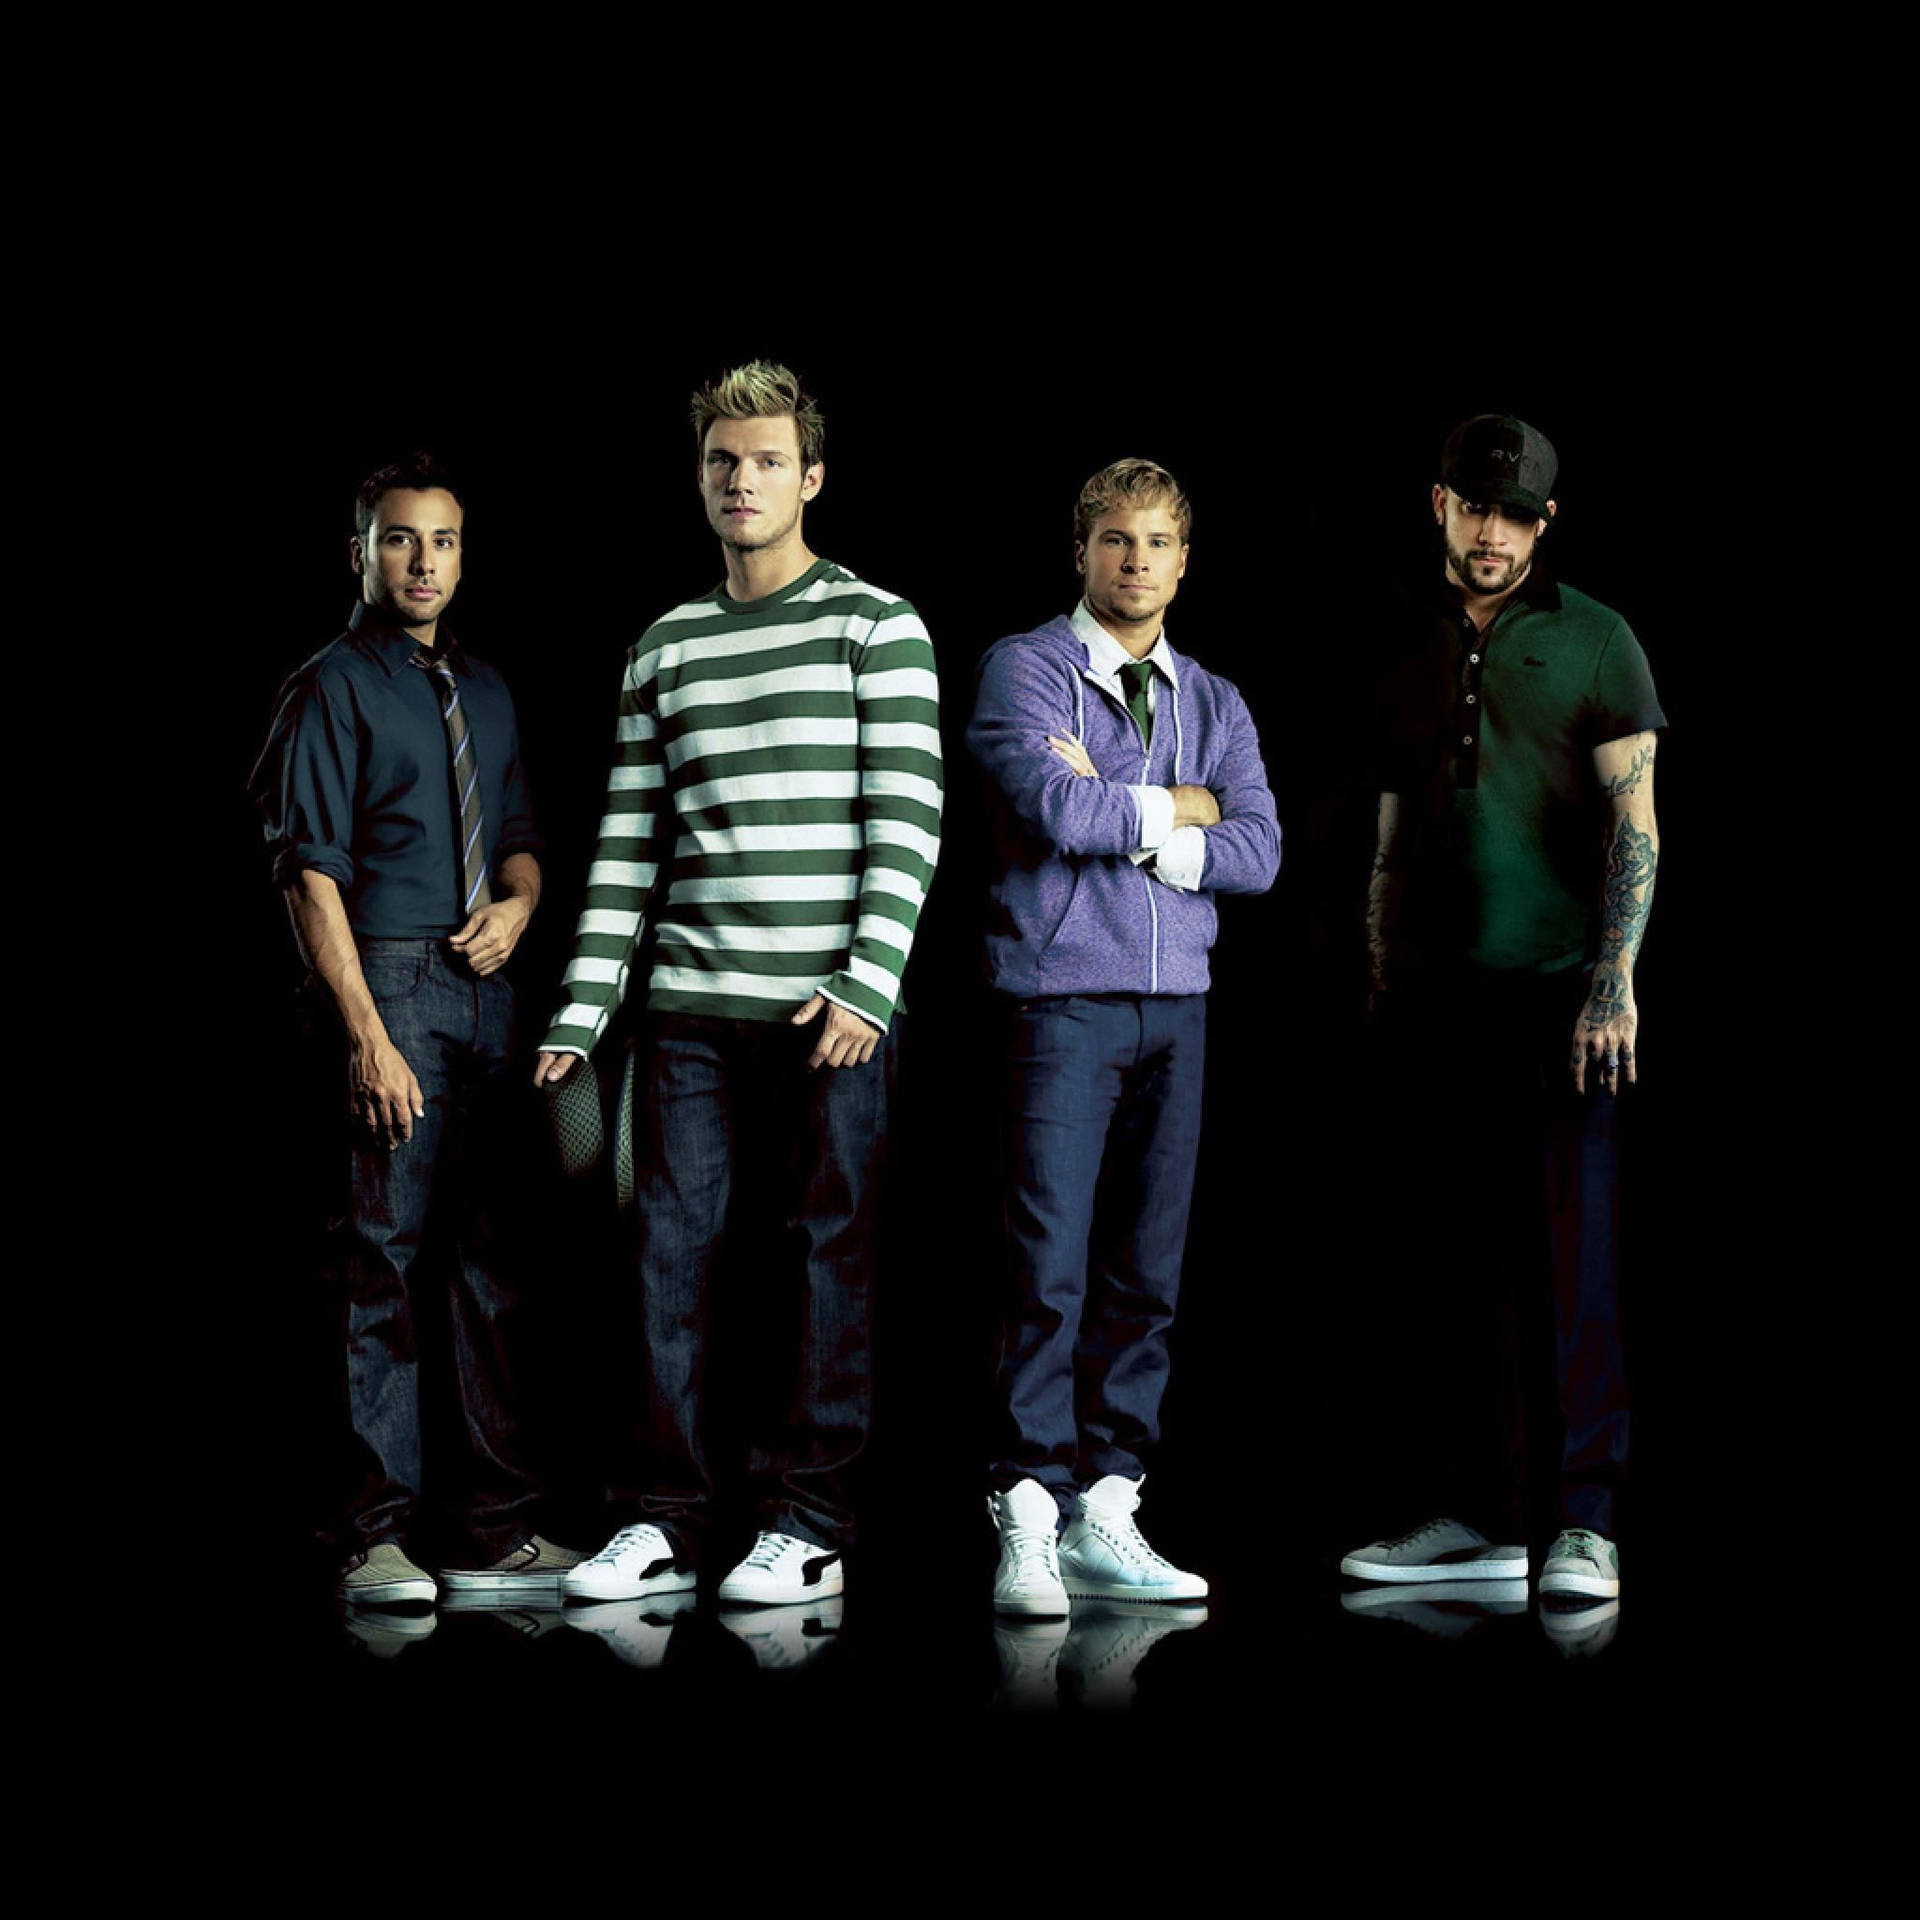 Legendary Boy Band Vocal Group Backstreet Boys Background